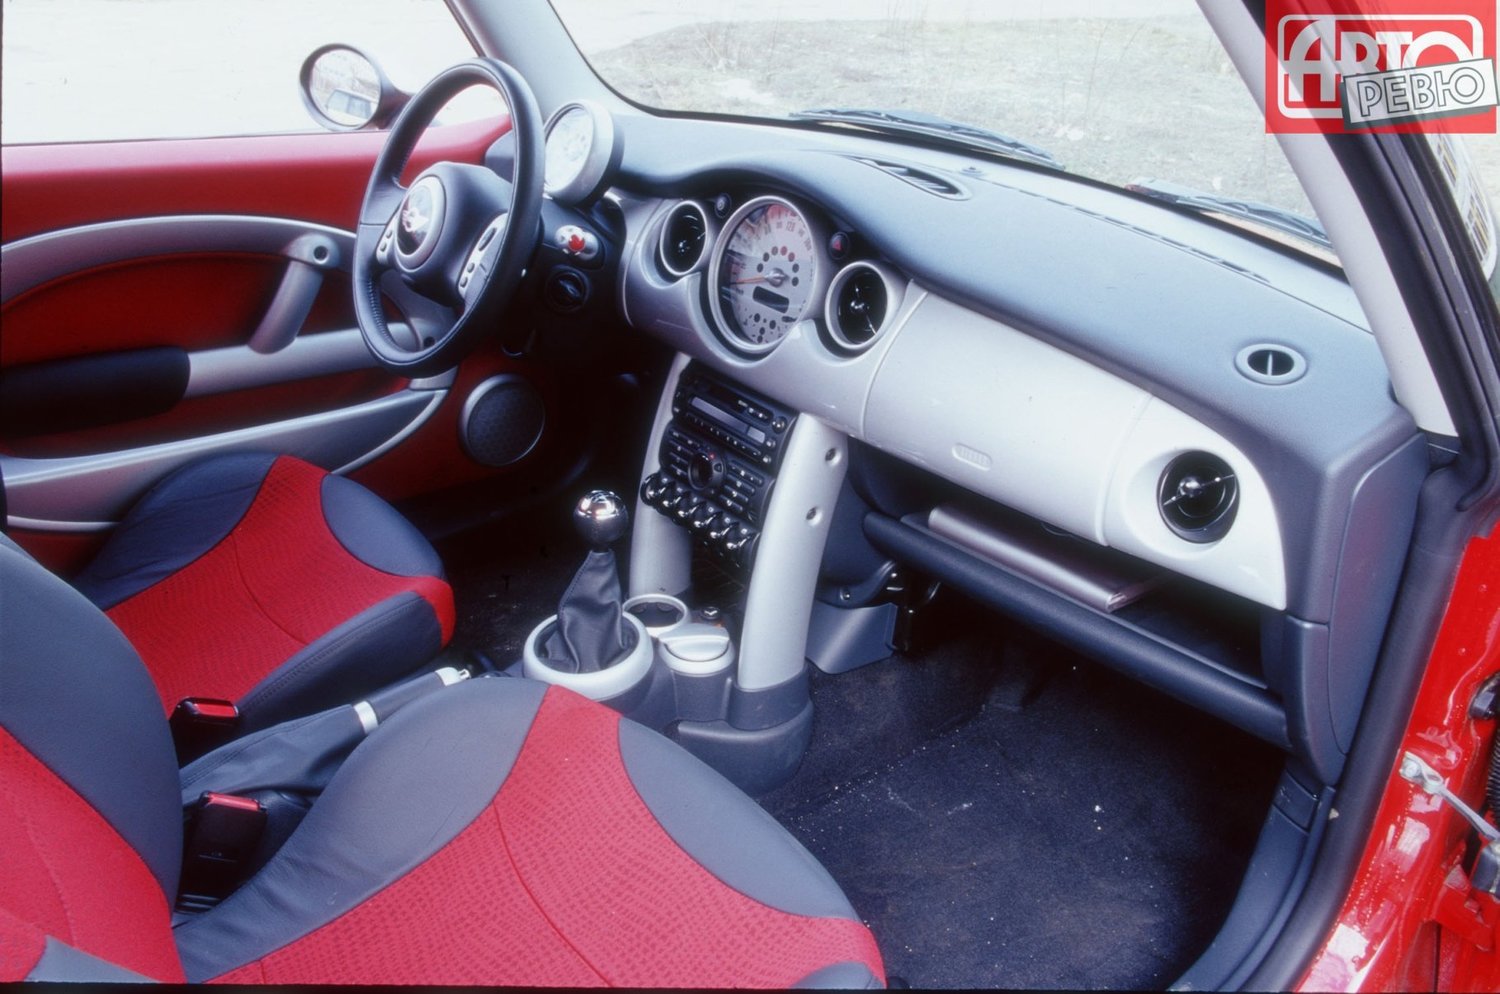 хэтчбек 3 дв. Cooper S MINI Hatch 2001 - 2006г выпуска модификация 1.6 AT (170 л.с.)